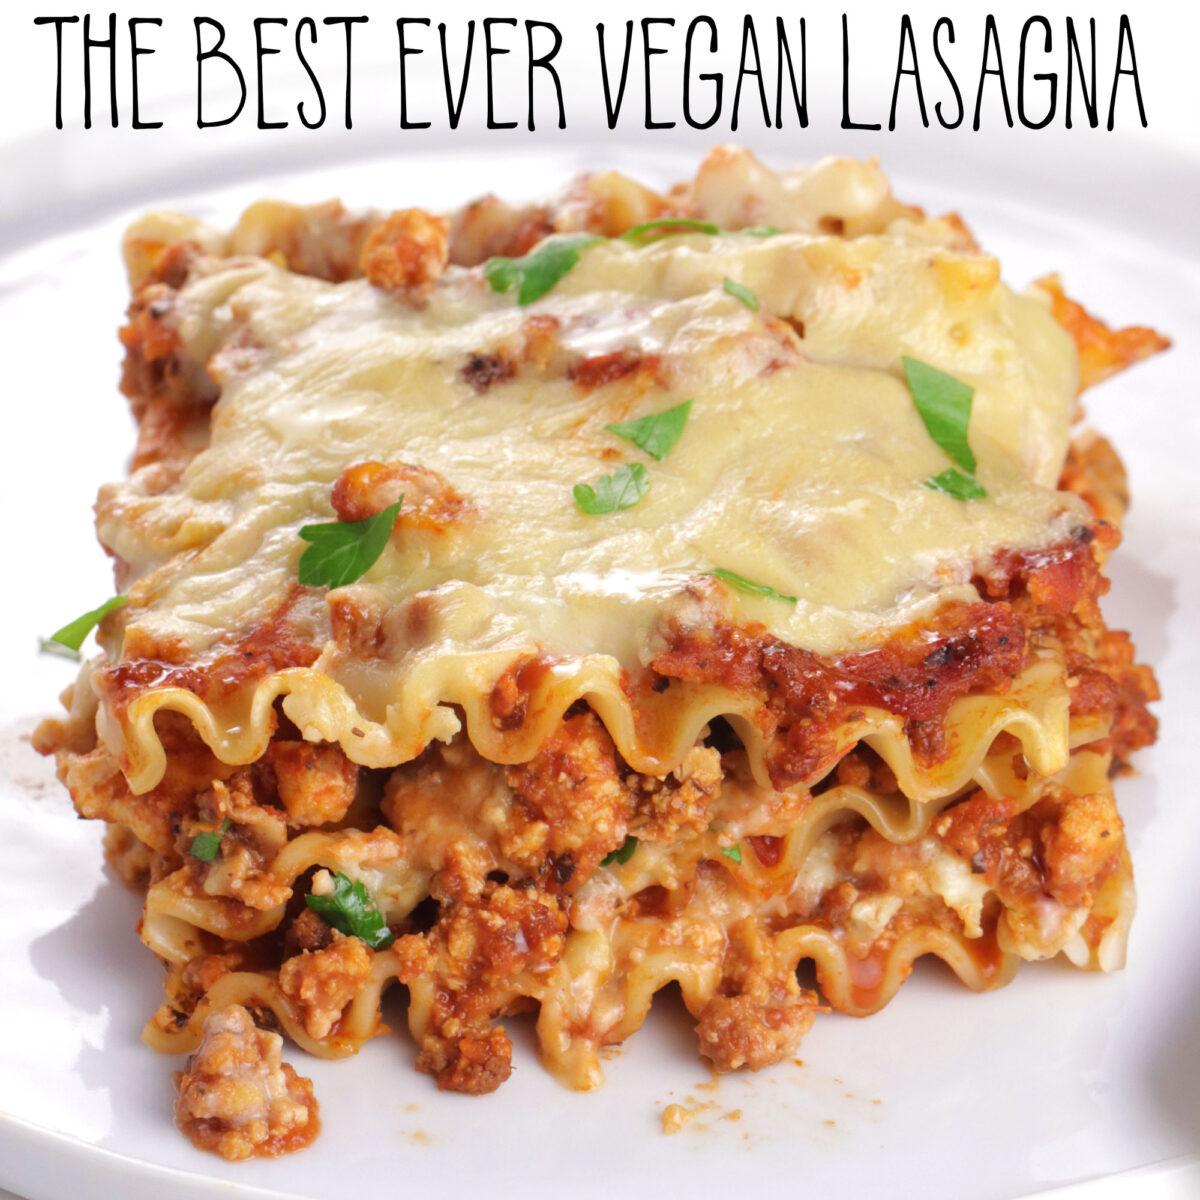 The Best Ever Vegan Lasagna